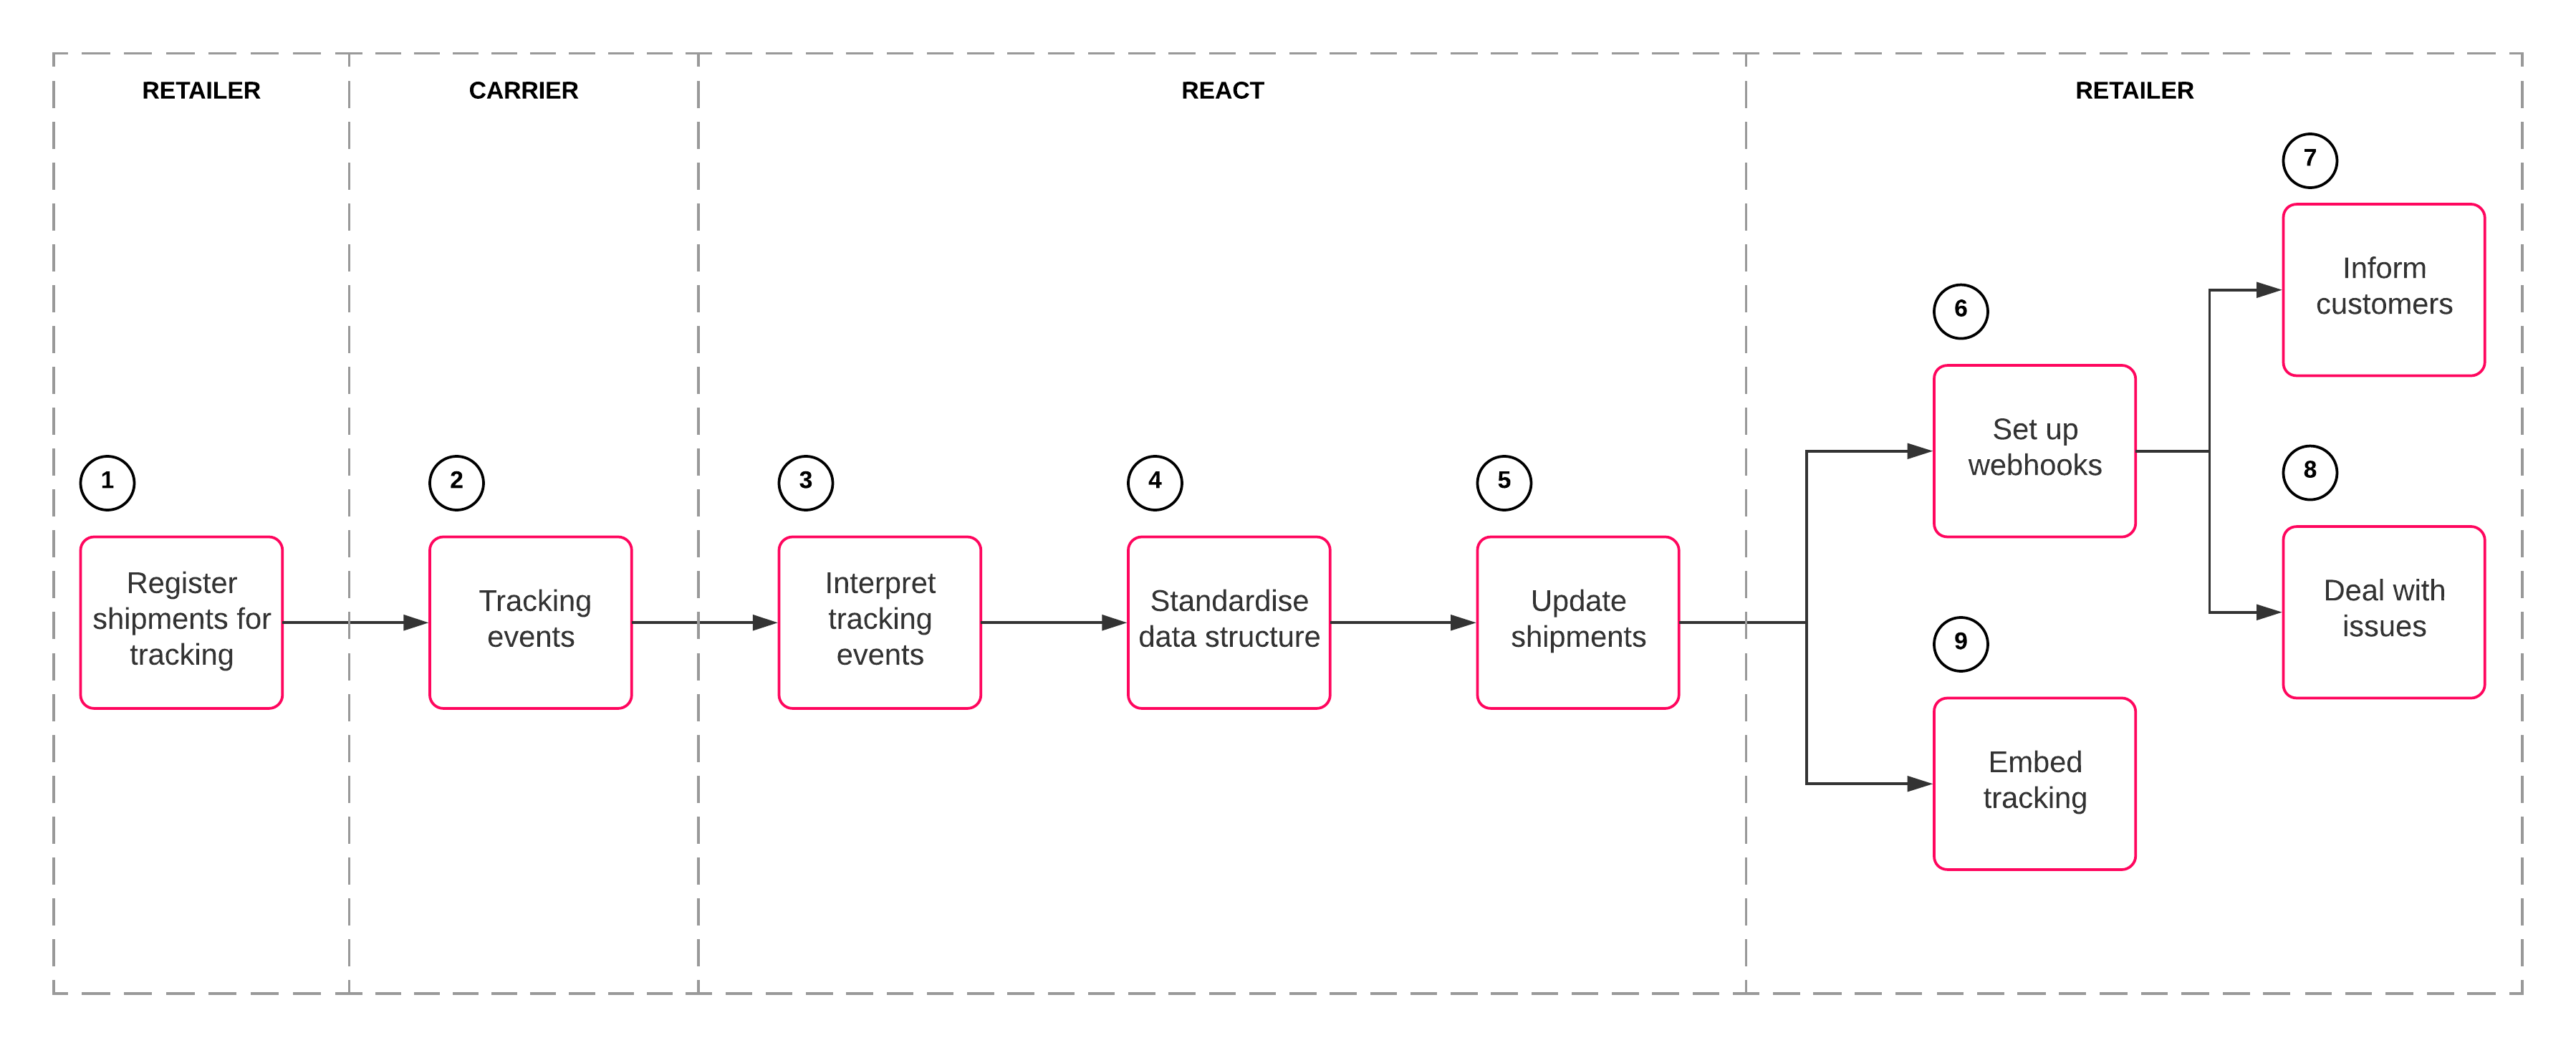 react-overview-diagram-v2